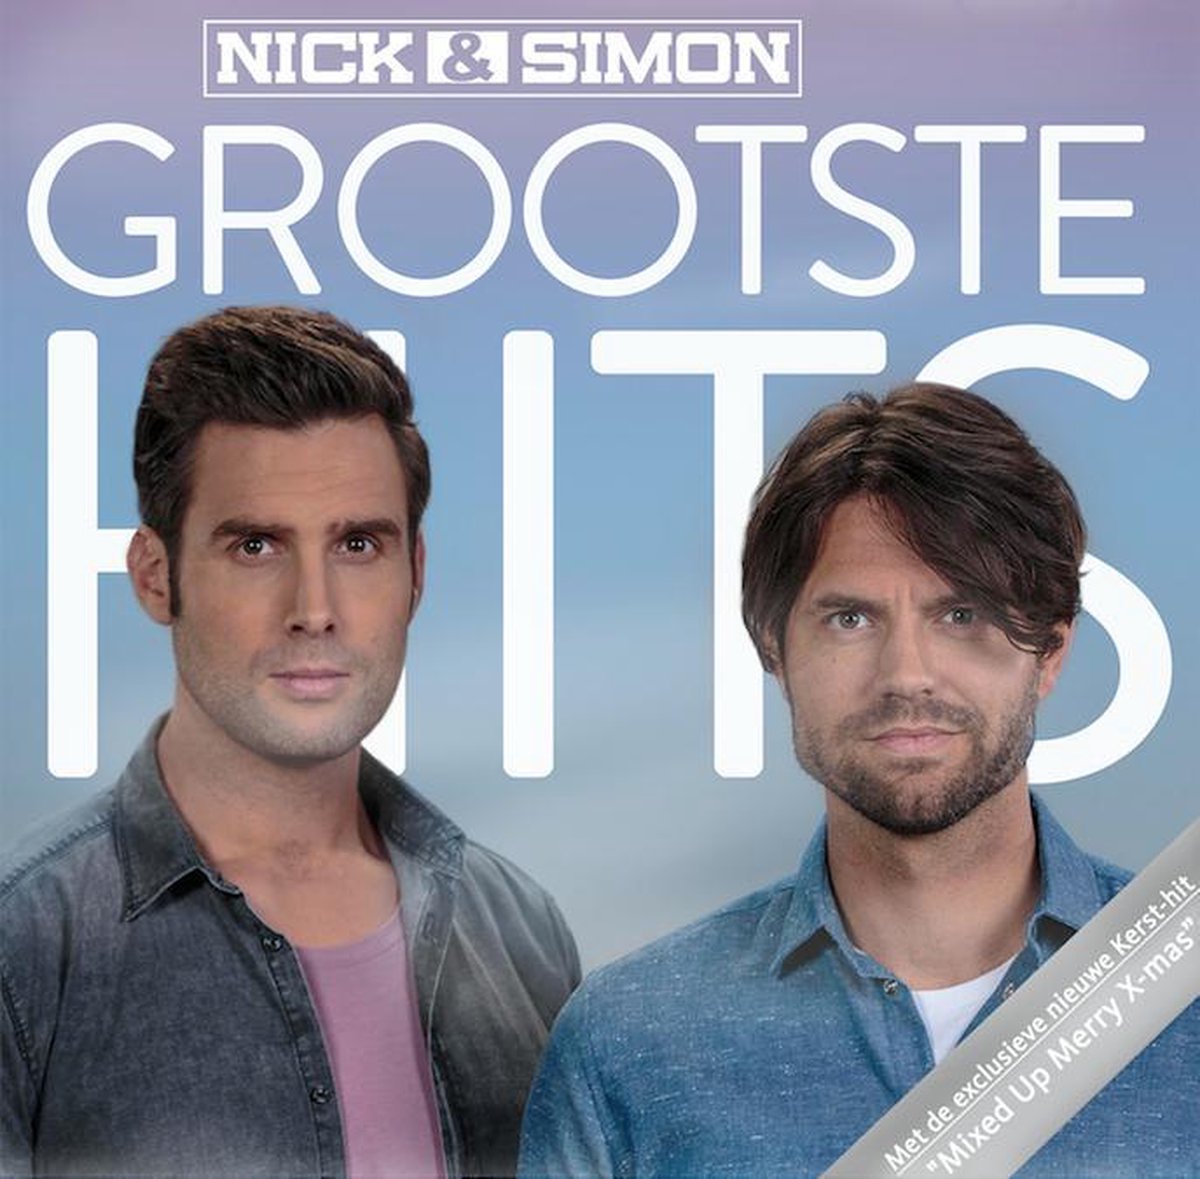 Grootste Hits‎‎ - Nick & Simon